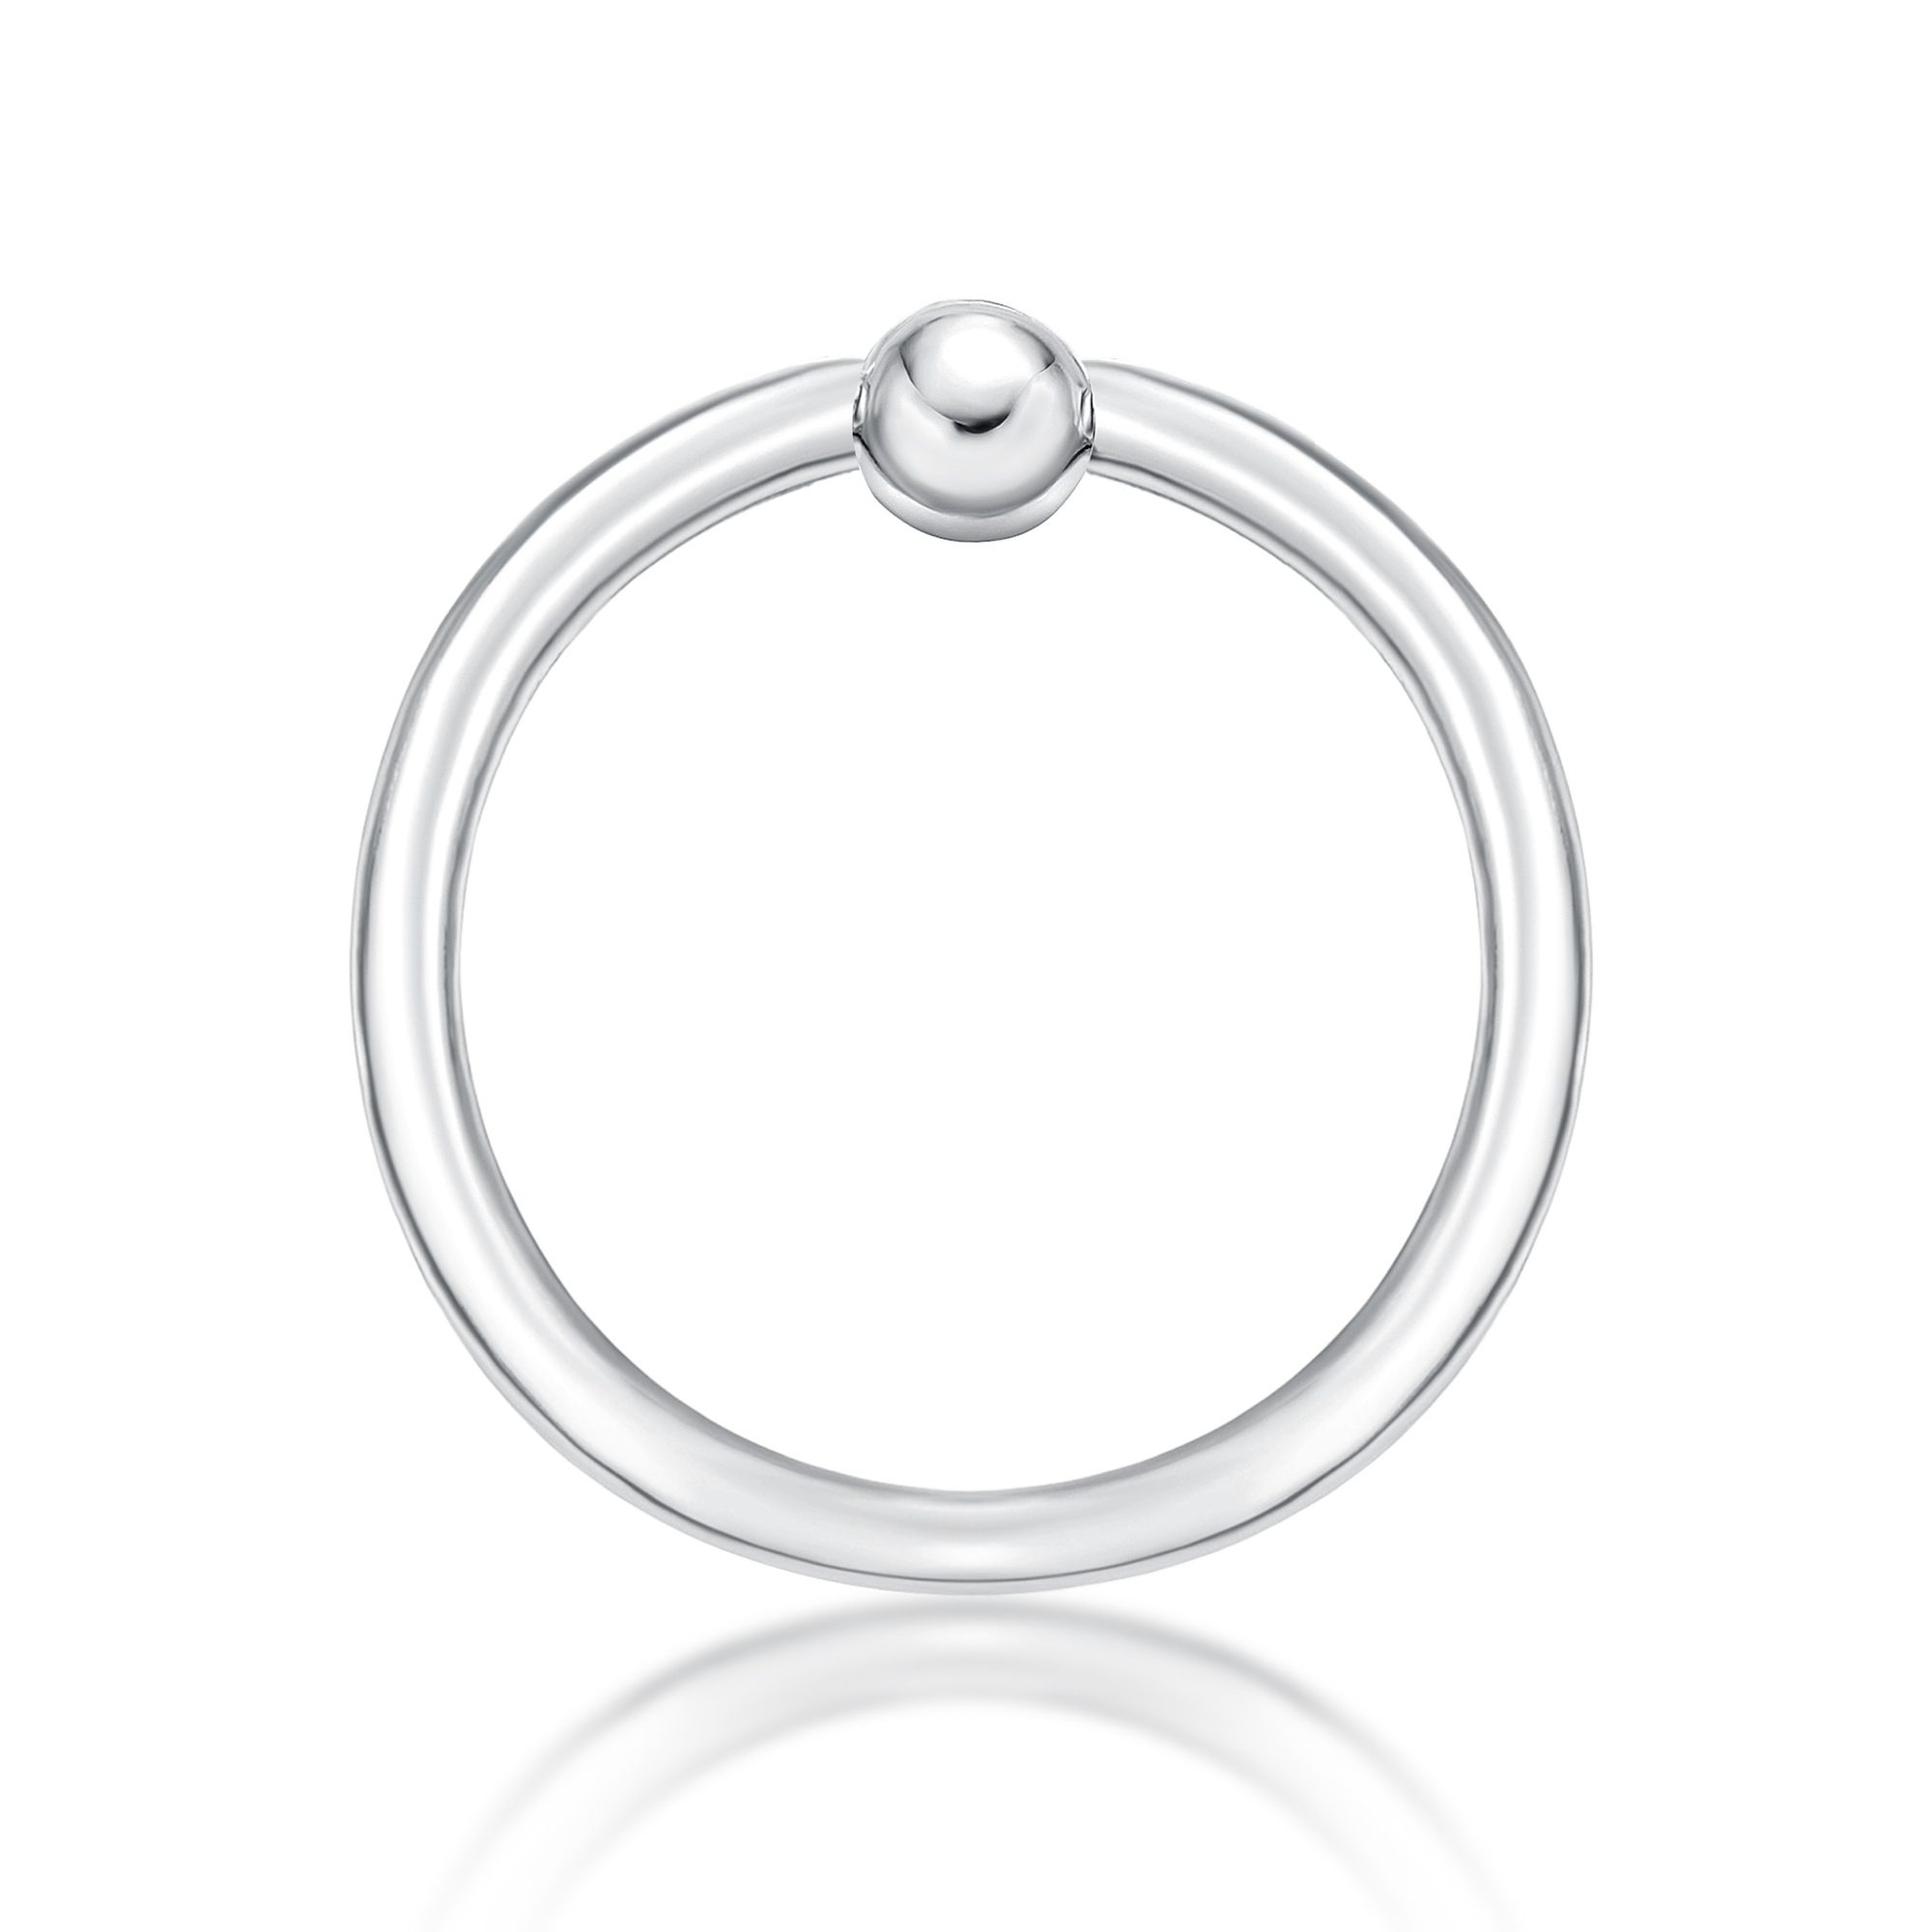 Lavari Jewelers Women's Captive Bead Universal Hoop Ring, 14K White Gold, 1/2 Inches, 14 Gauge